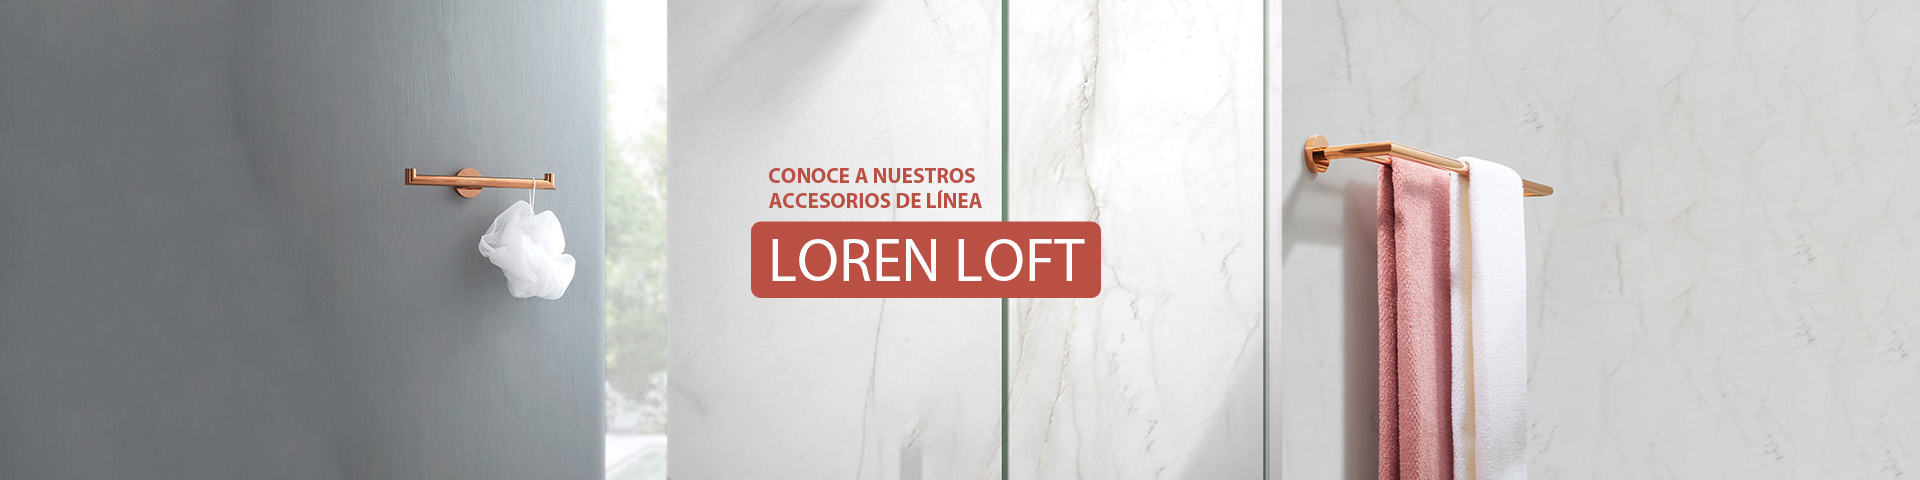 Loren Loft RG